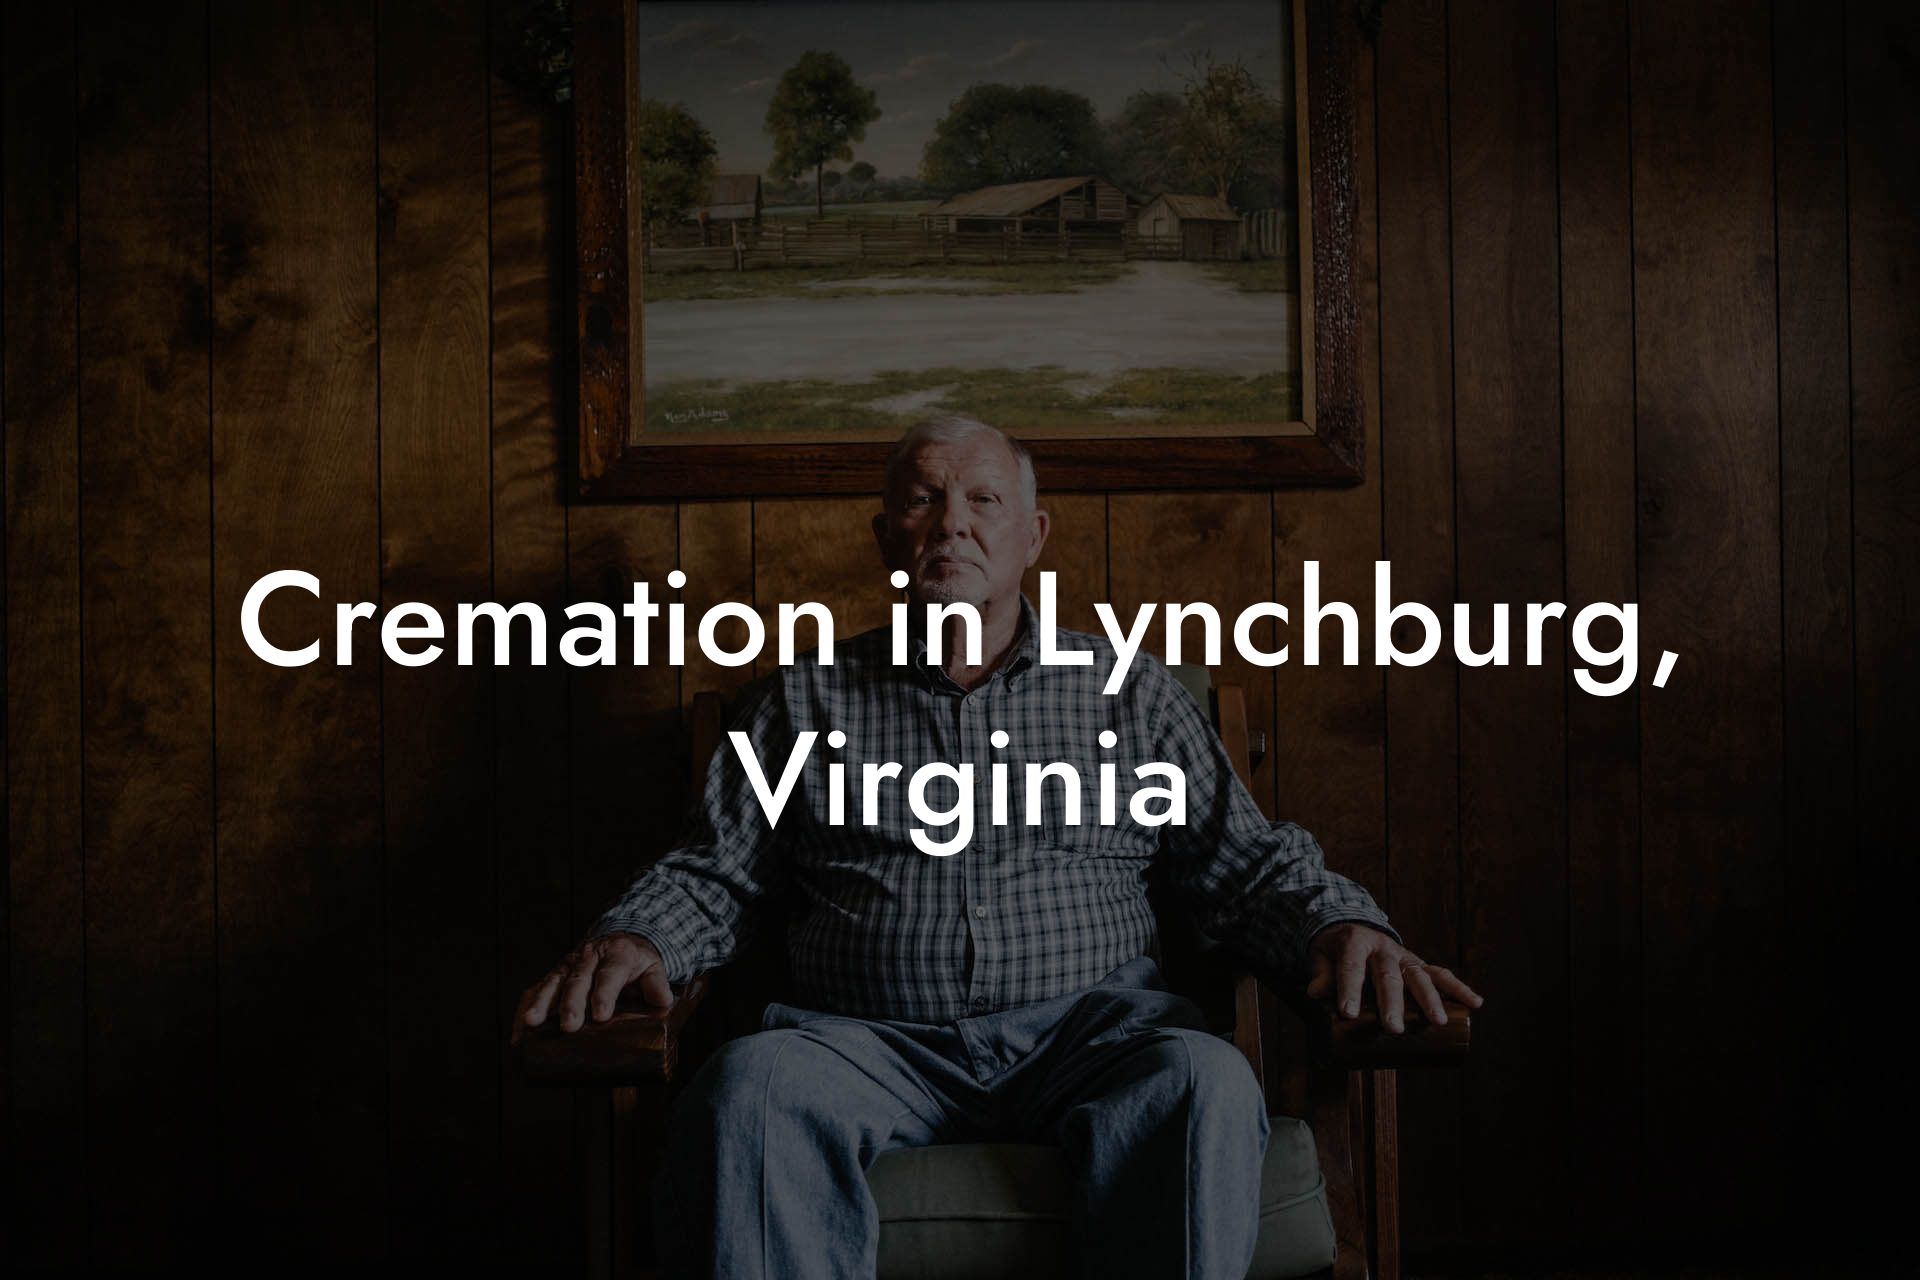 Cremation in Lynchburg, Virginia